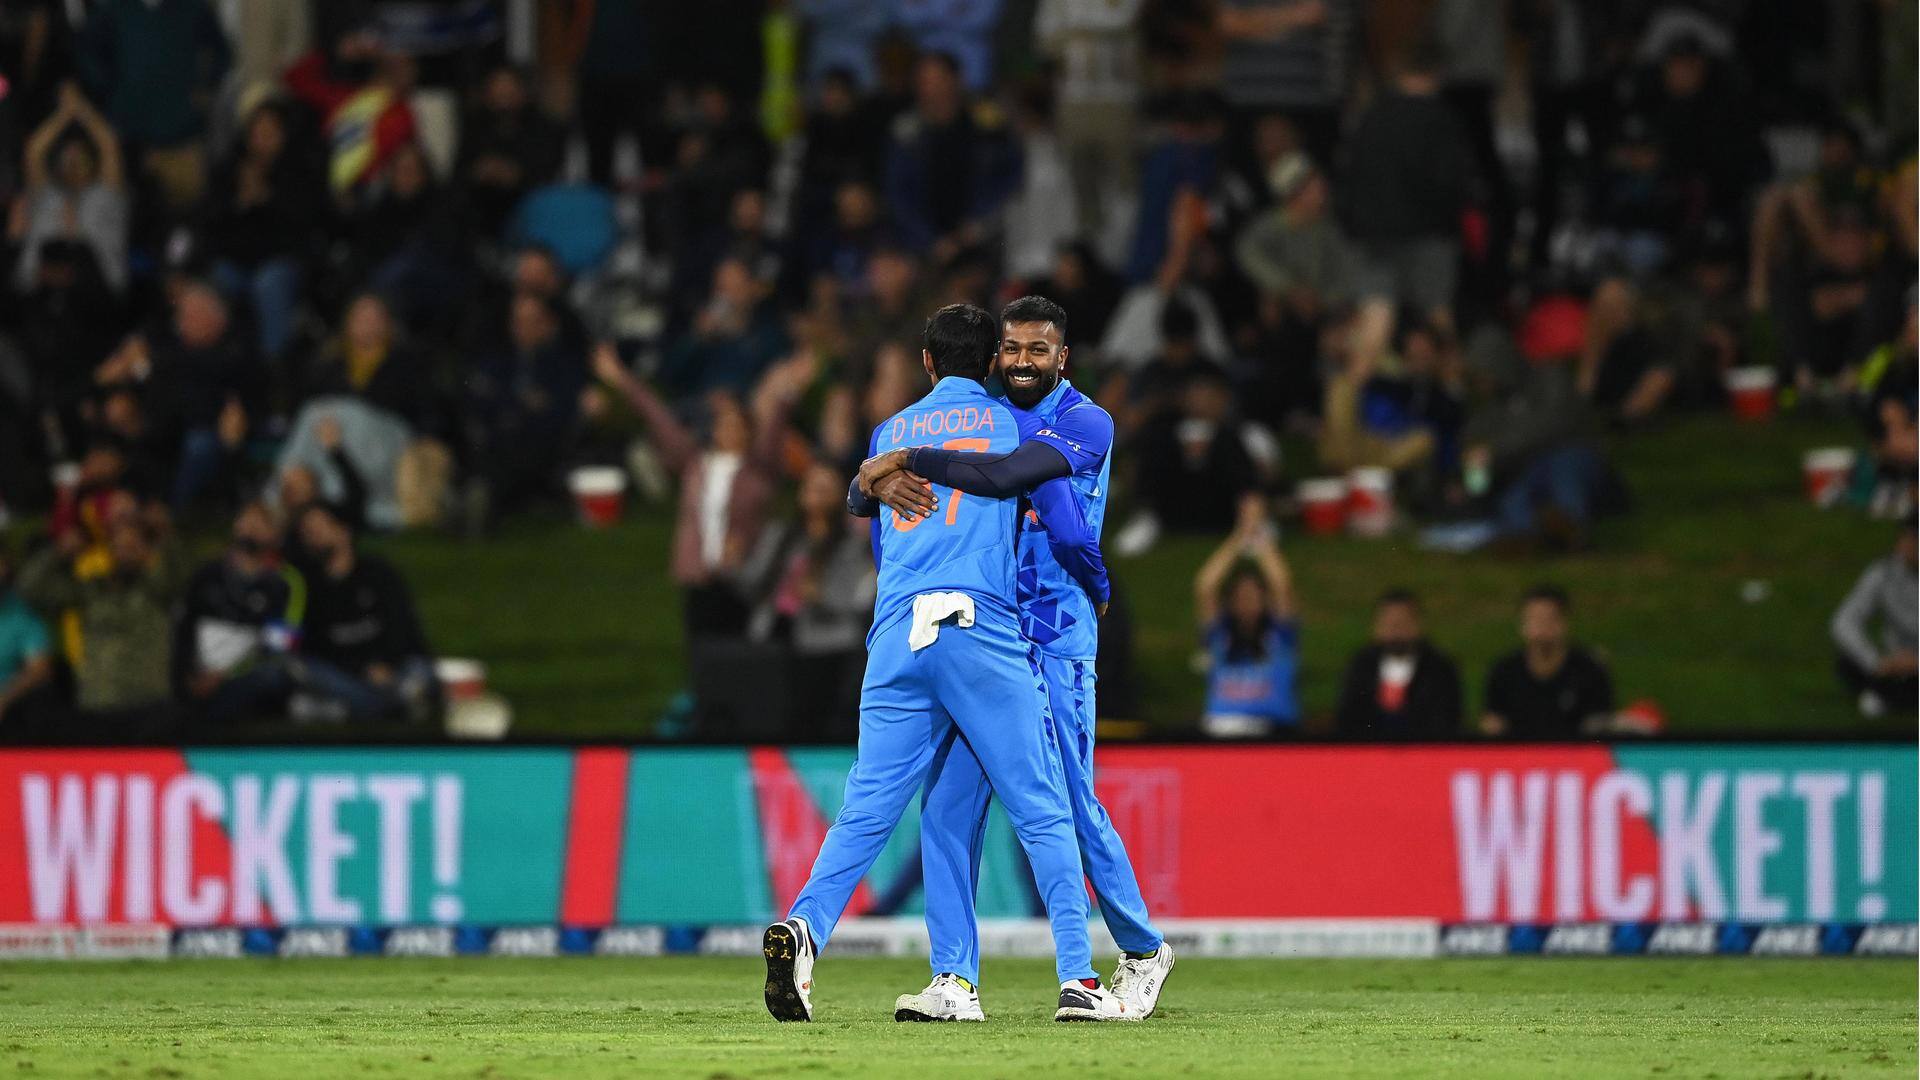 New Zealand vs India, 3rd T20I: Key player battles